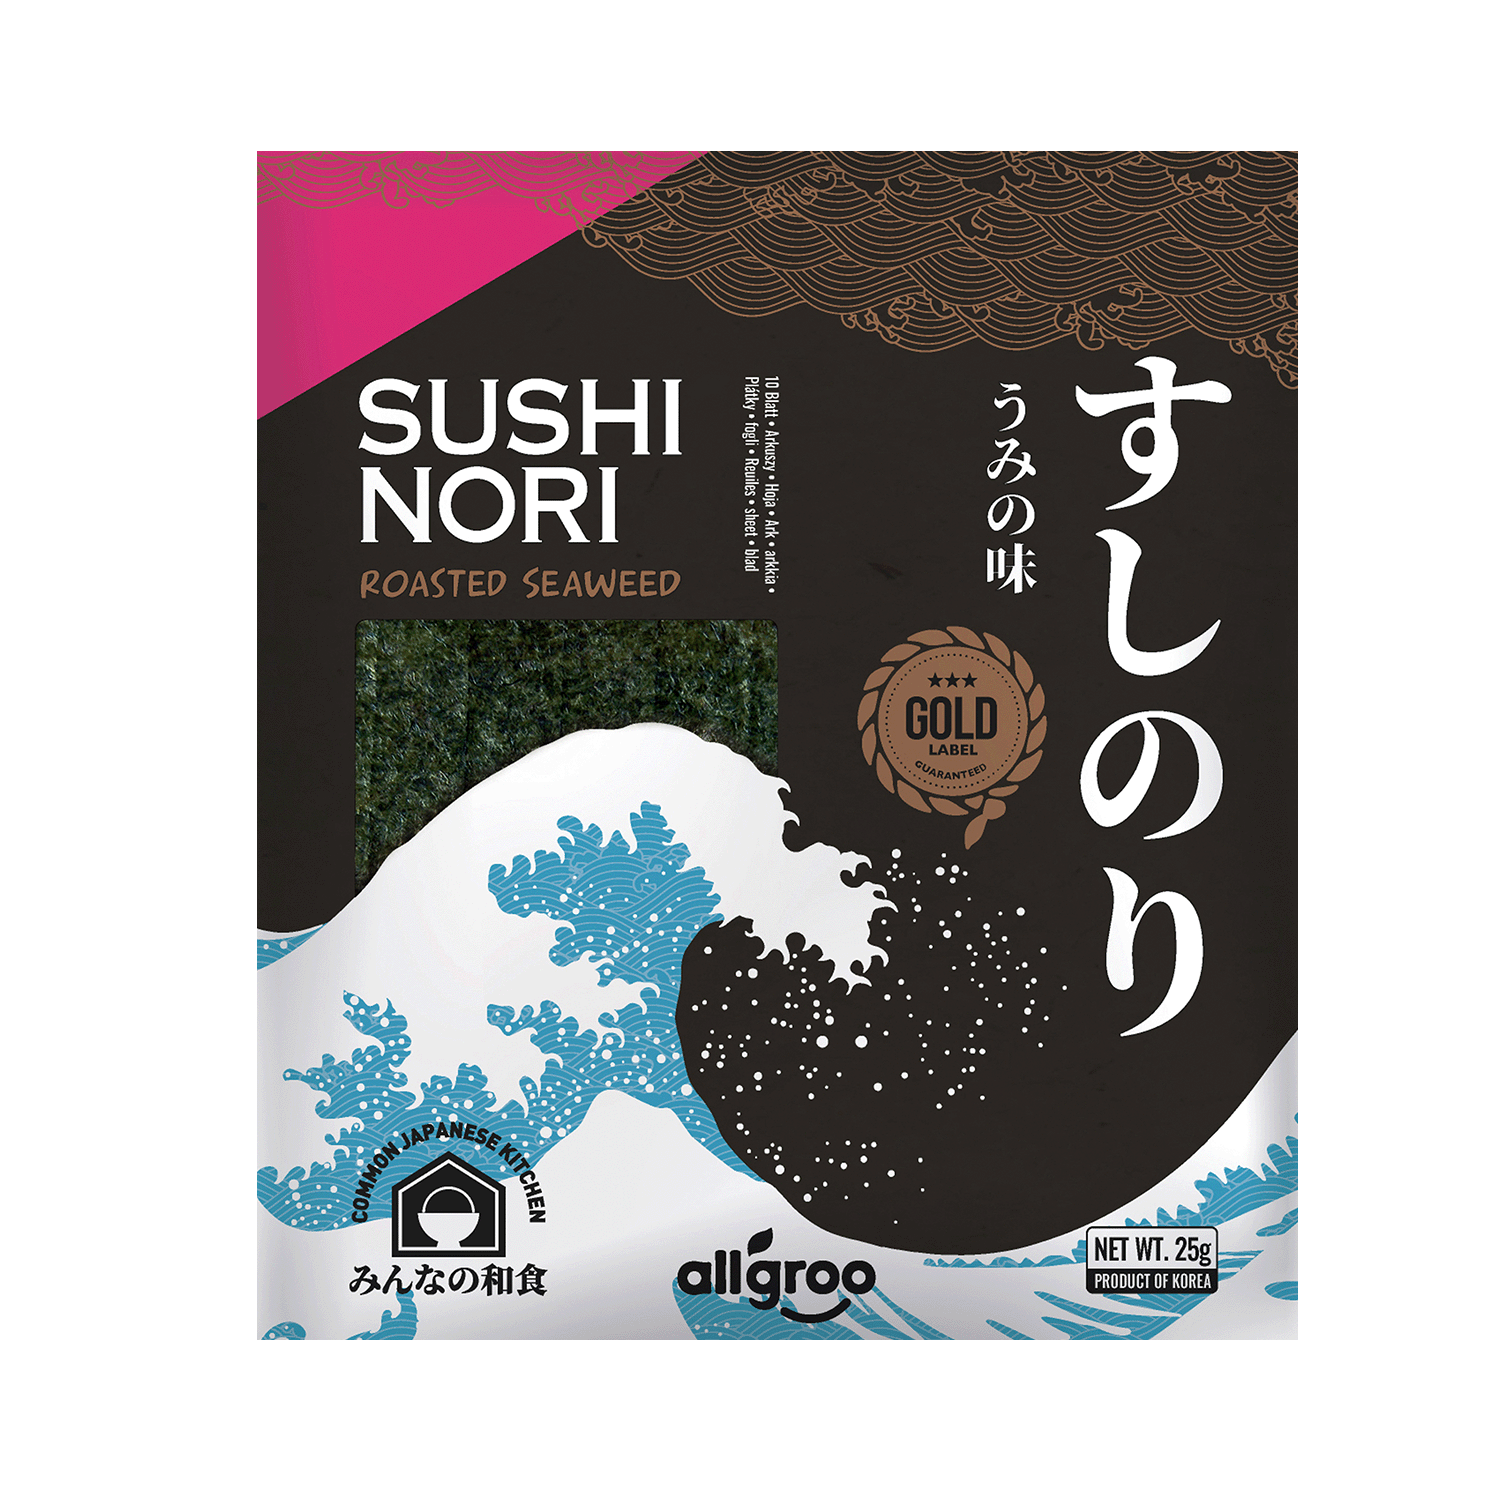 Seaweed roasted suhi nori, 25g